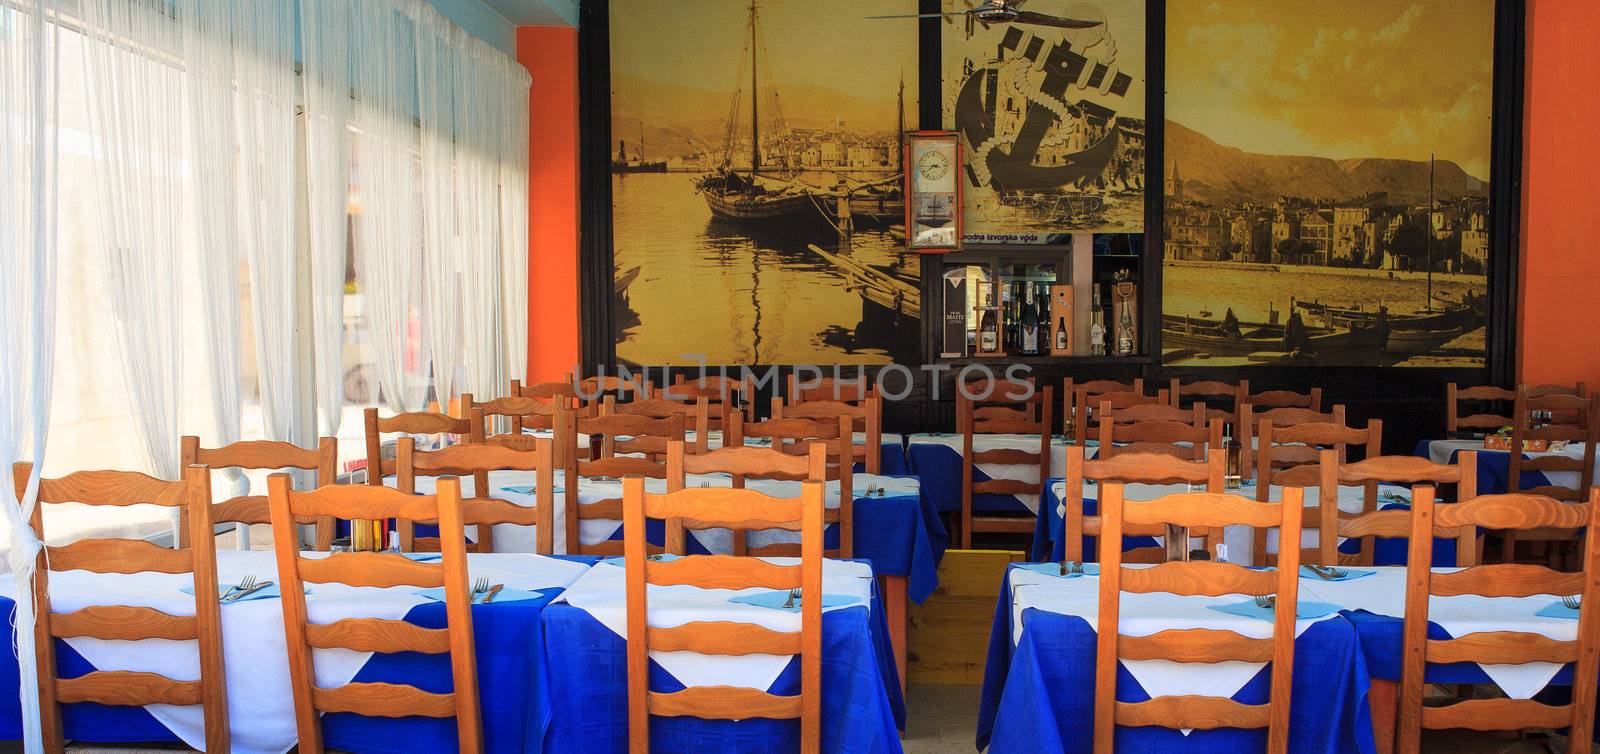 Photo of restaurant tables in Baska, Krk island - Croatia